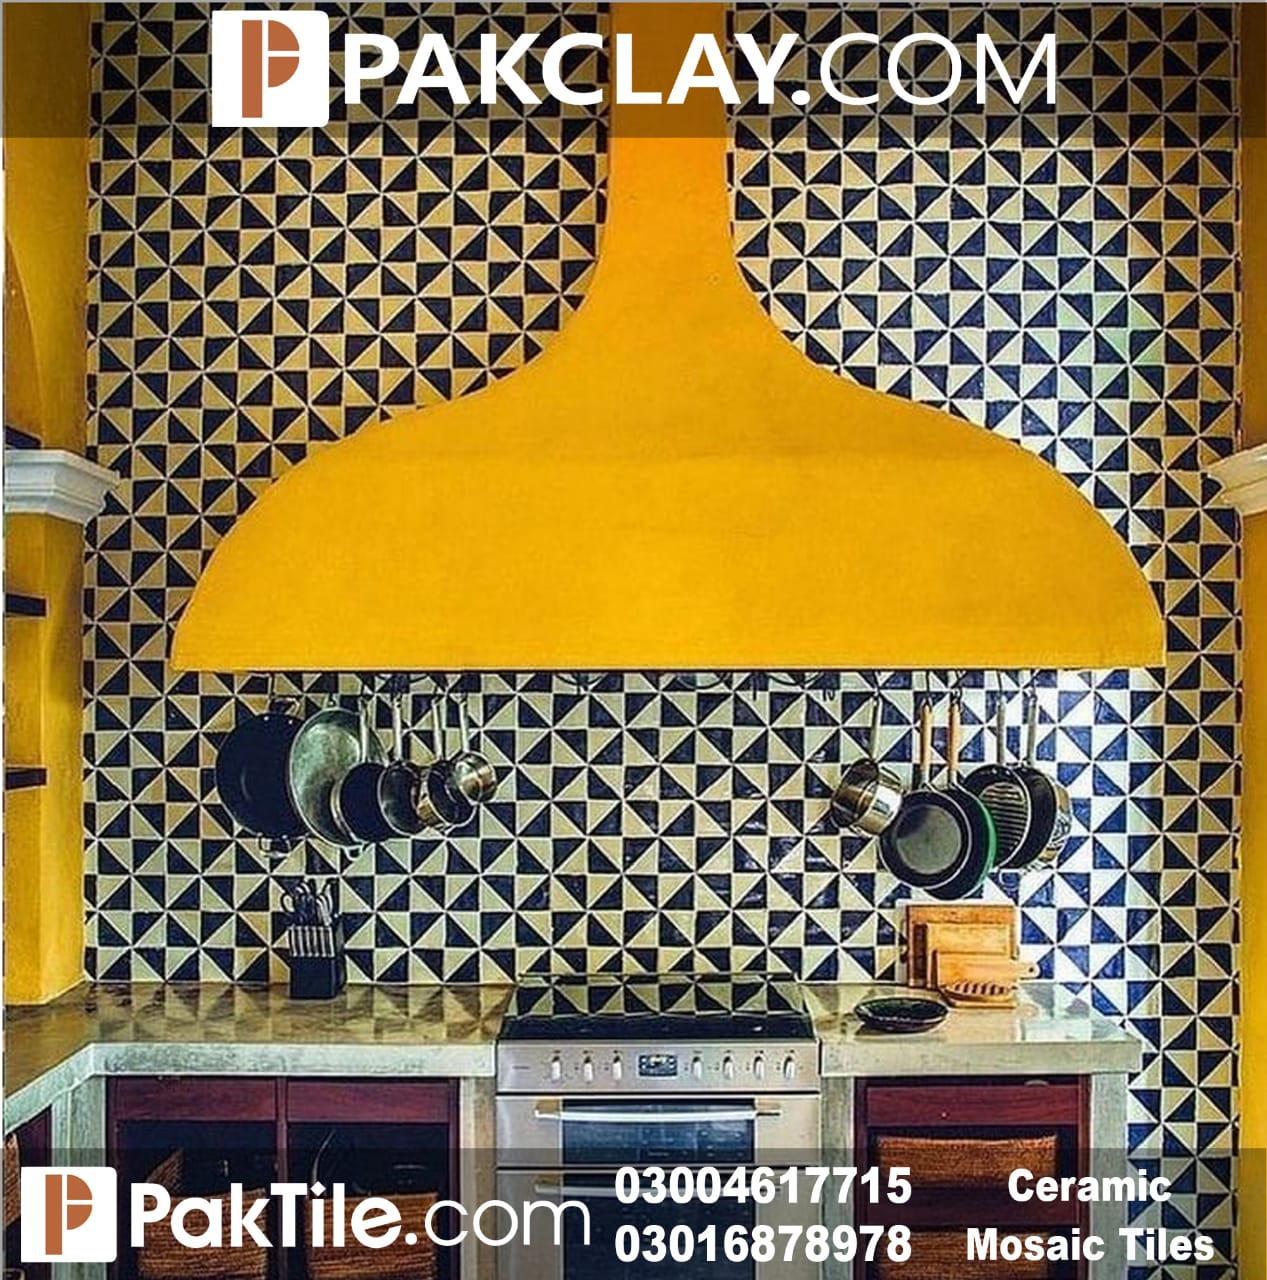 Pak Clay Handmade Mosaic Tiles in Pakistan